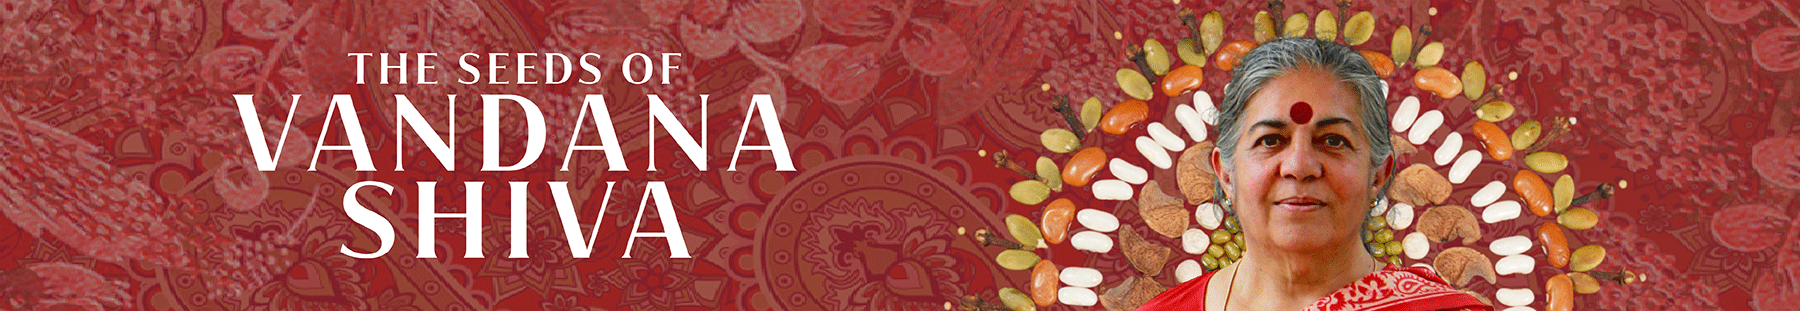 Banner for The Seeds of Vandana Shiva